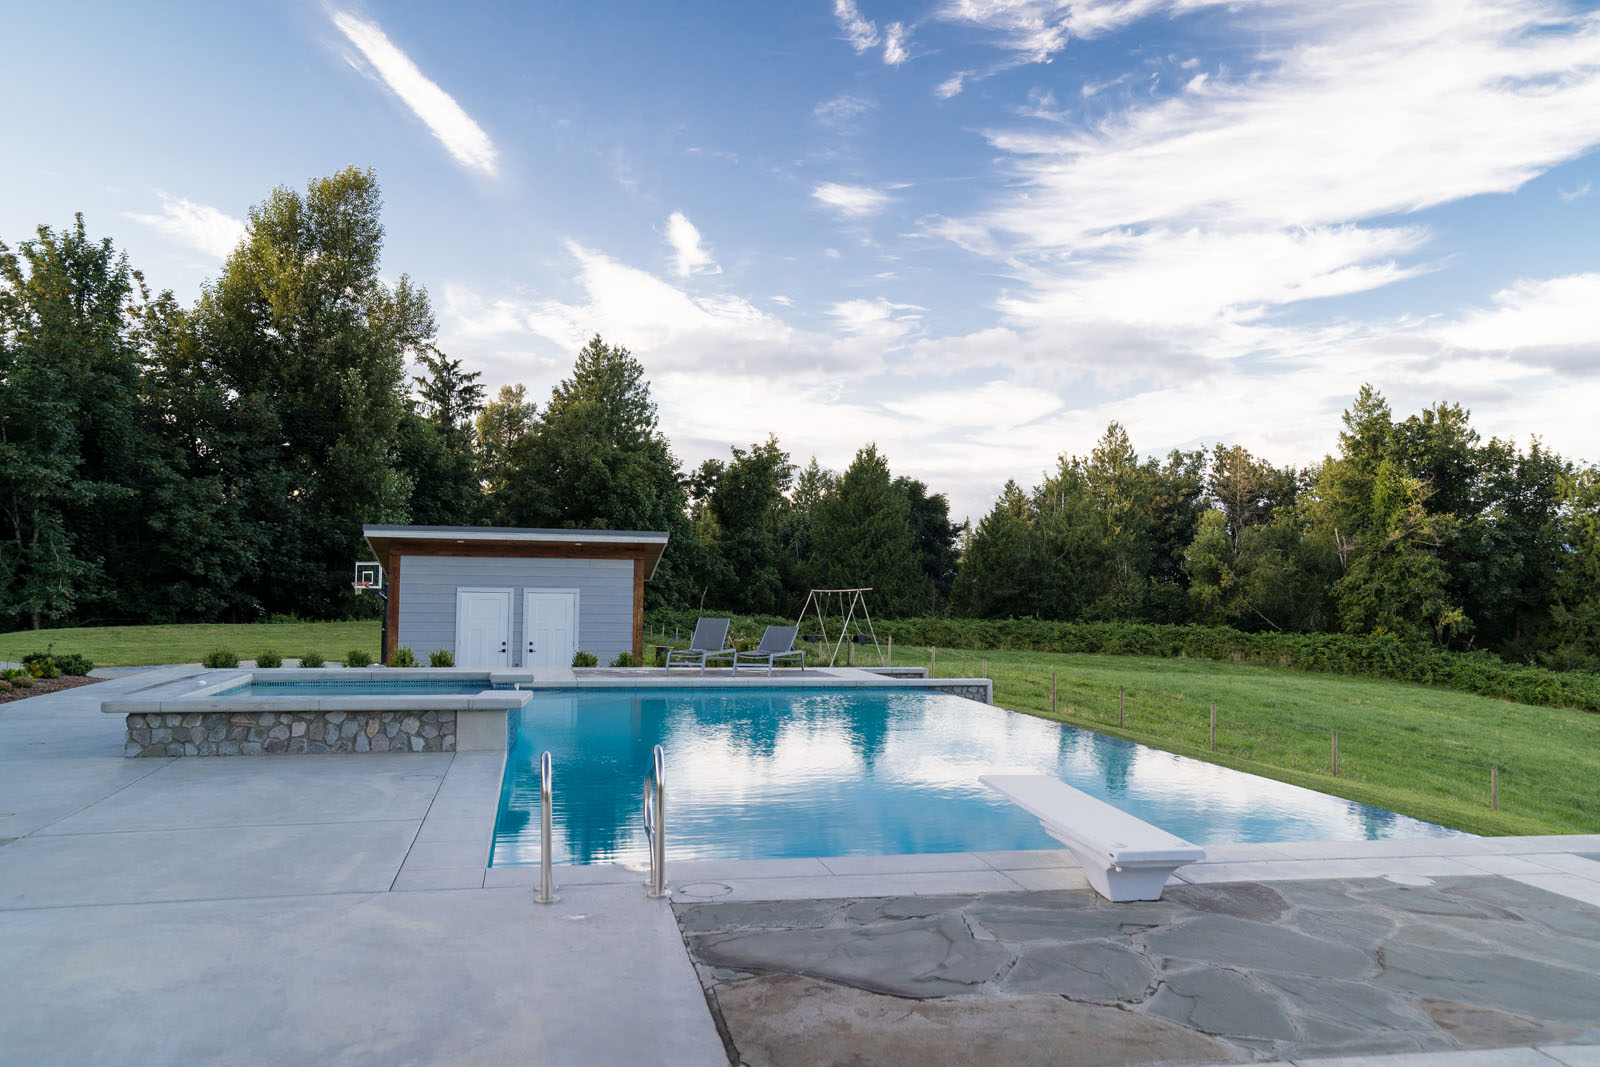 Concrete-swimming-pool-azuro-REI026